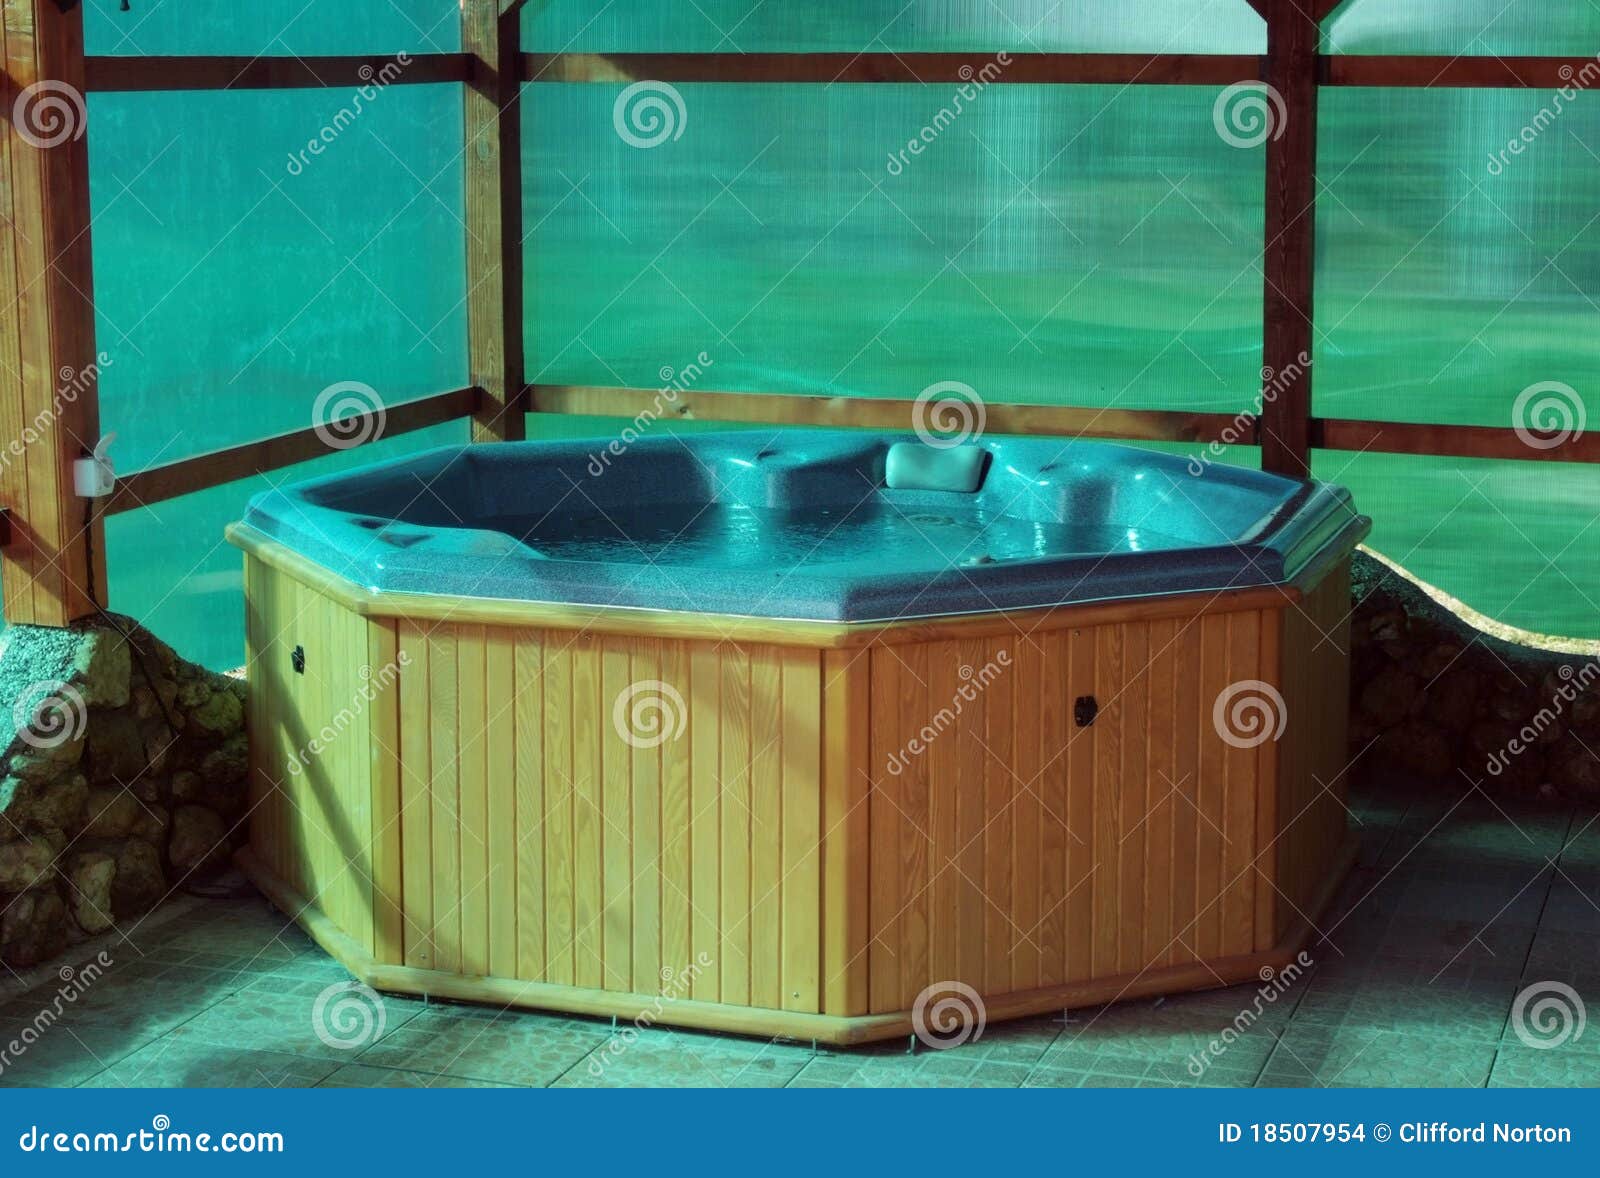 wooden hot tub